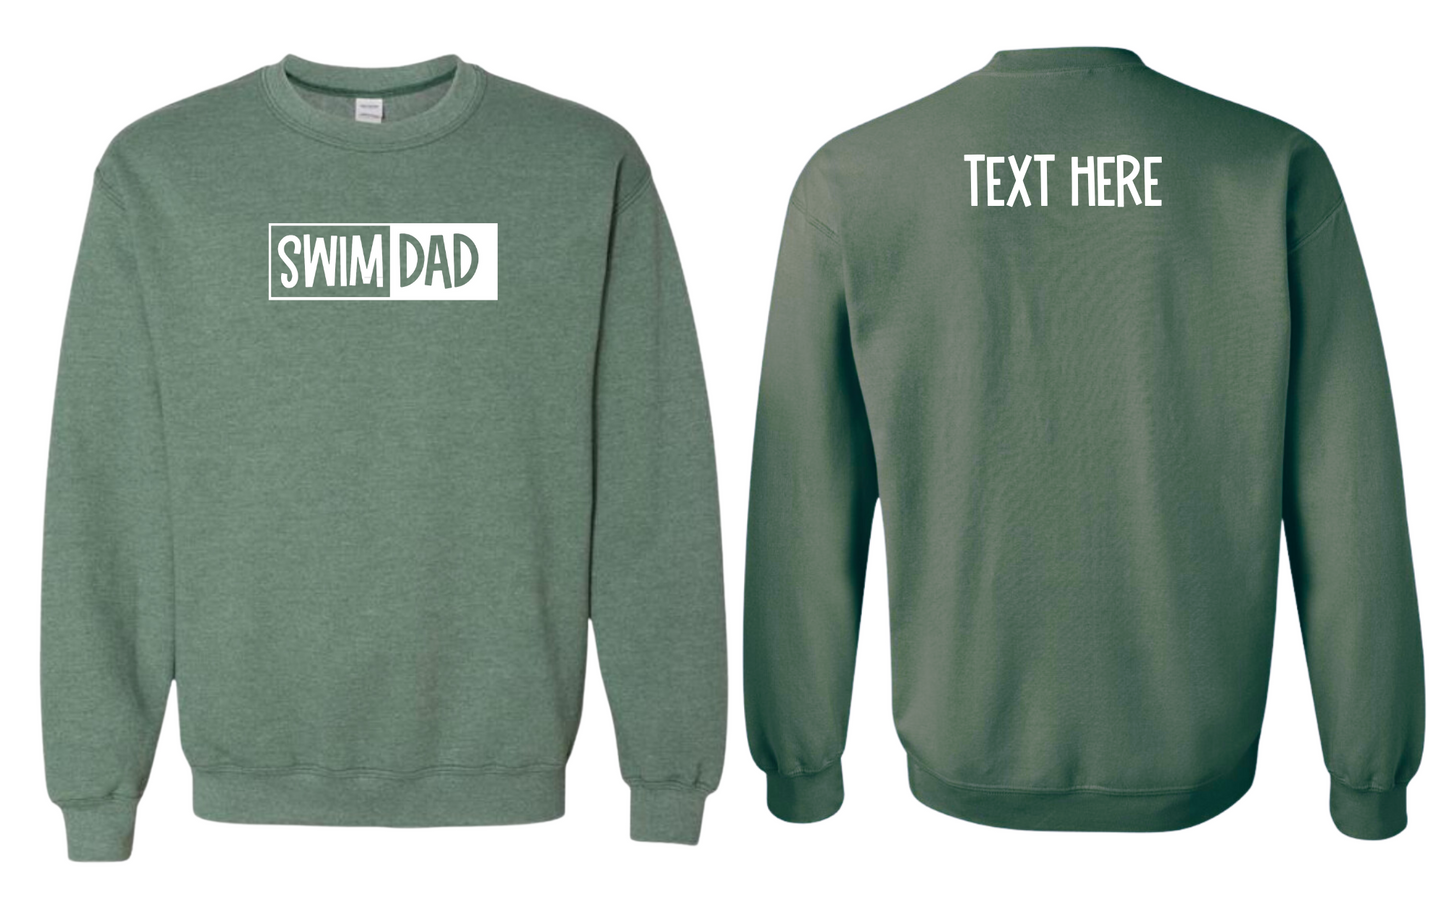 Swim Dad - White Text - Adult Sweatshirt - Personalized on back